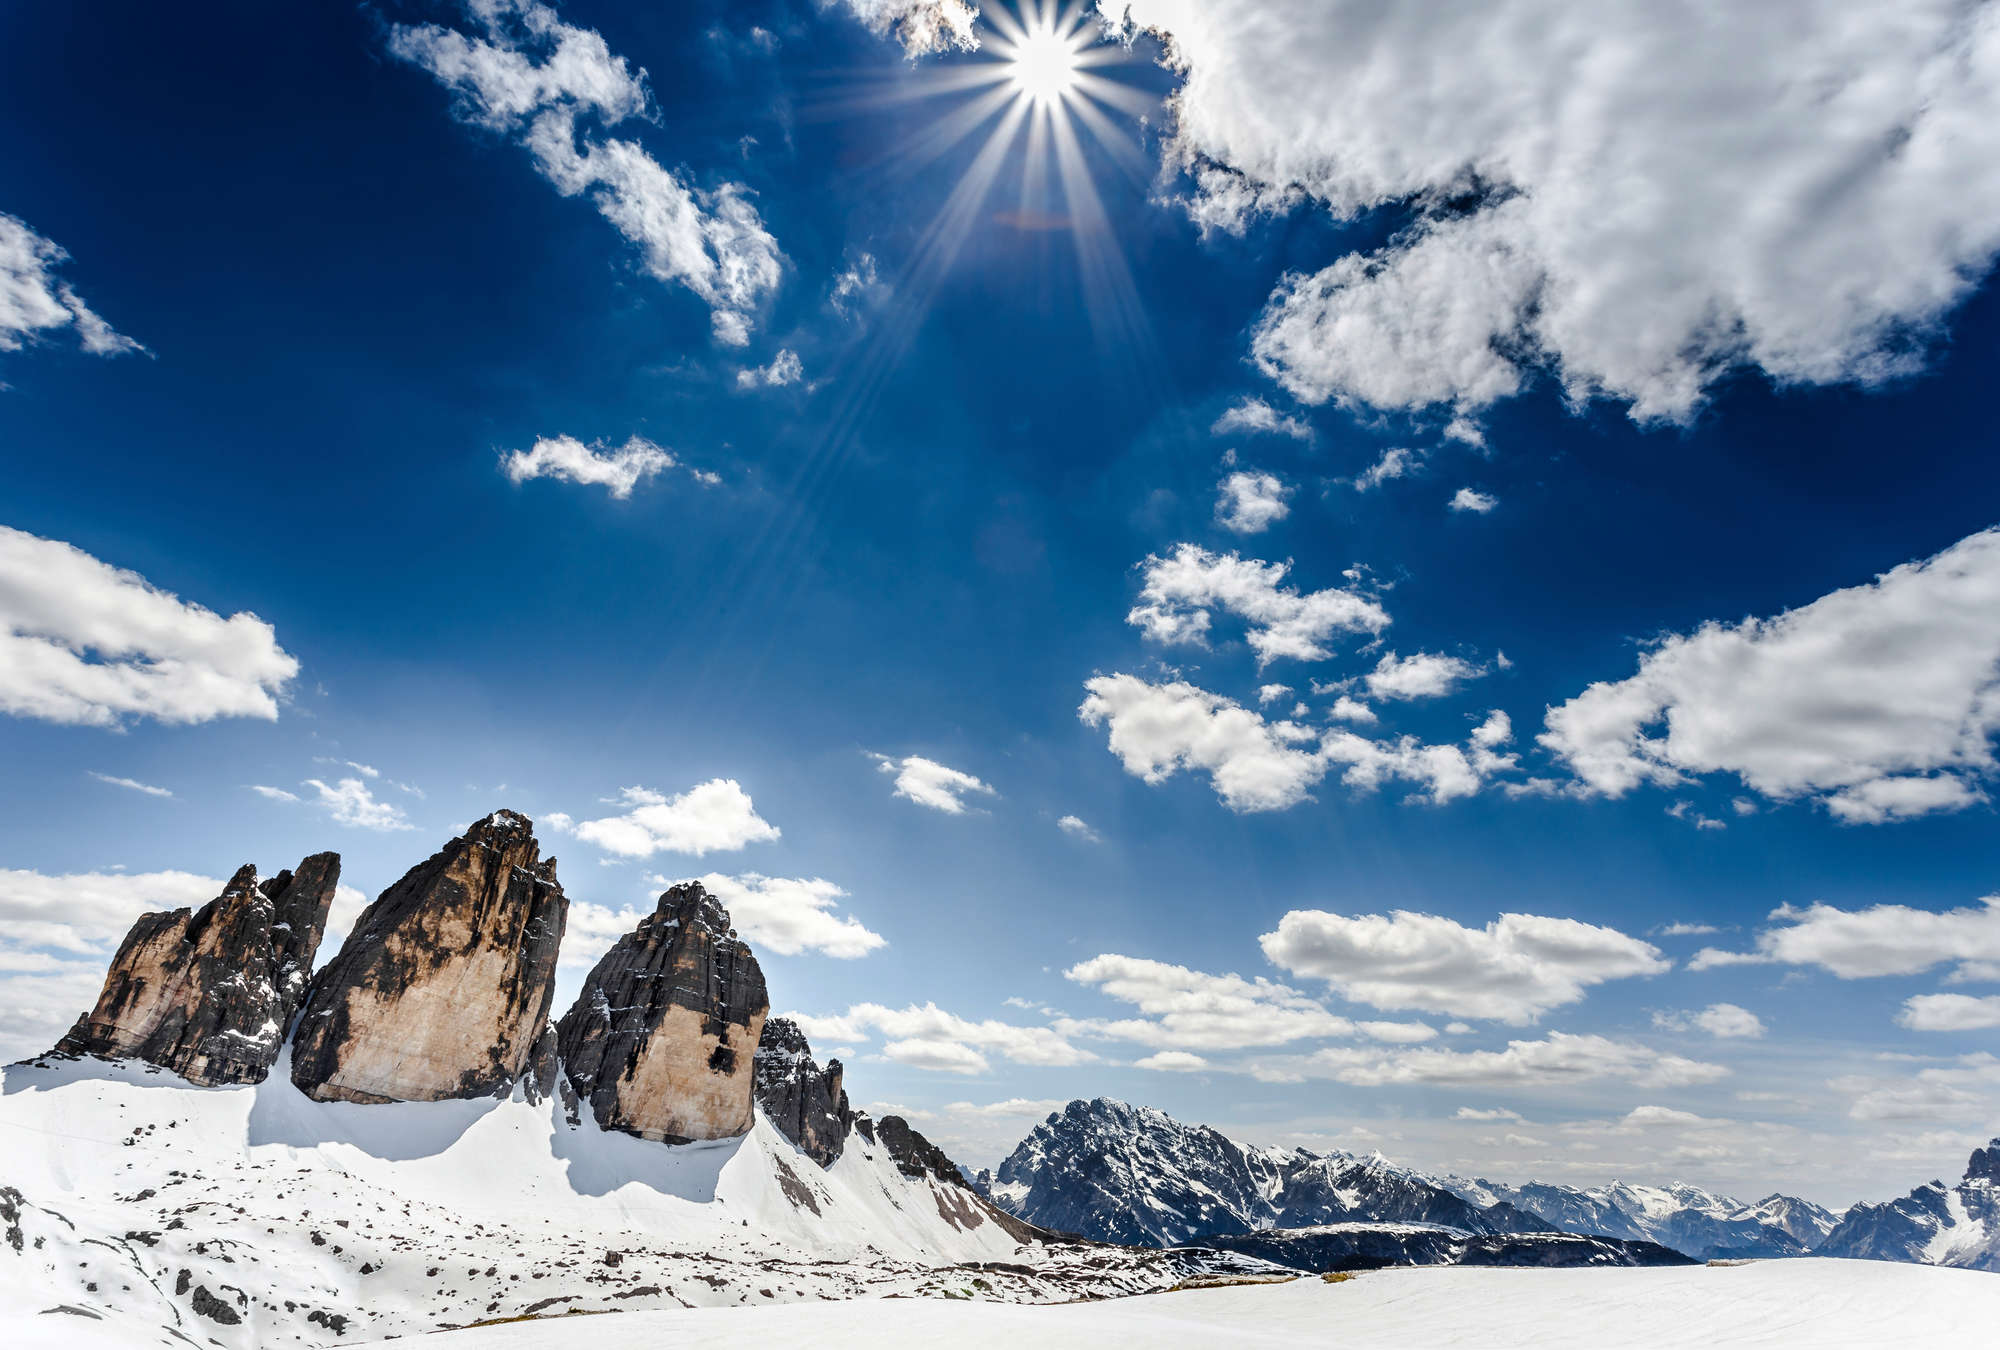             Fotomural Paisaje invernal de montaña con vista a los tres picos
        